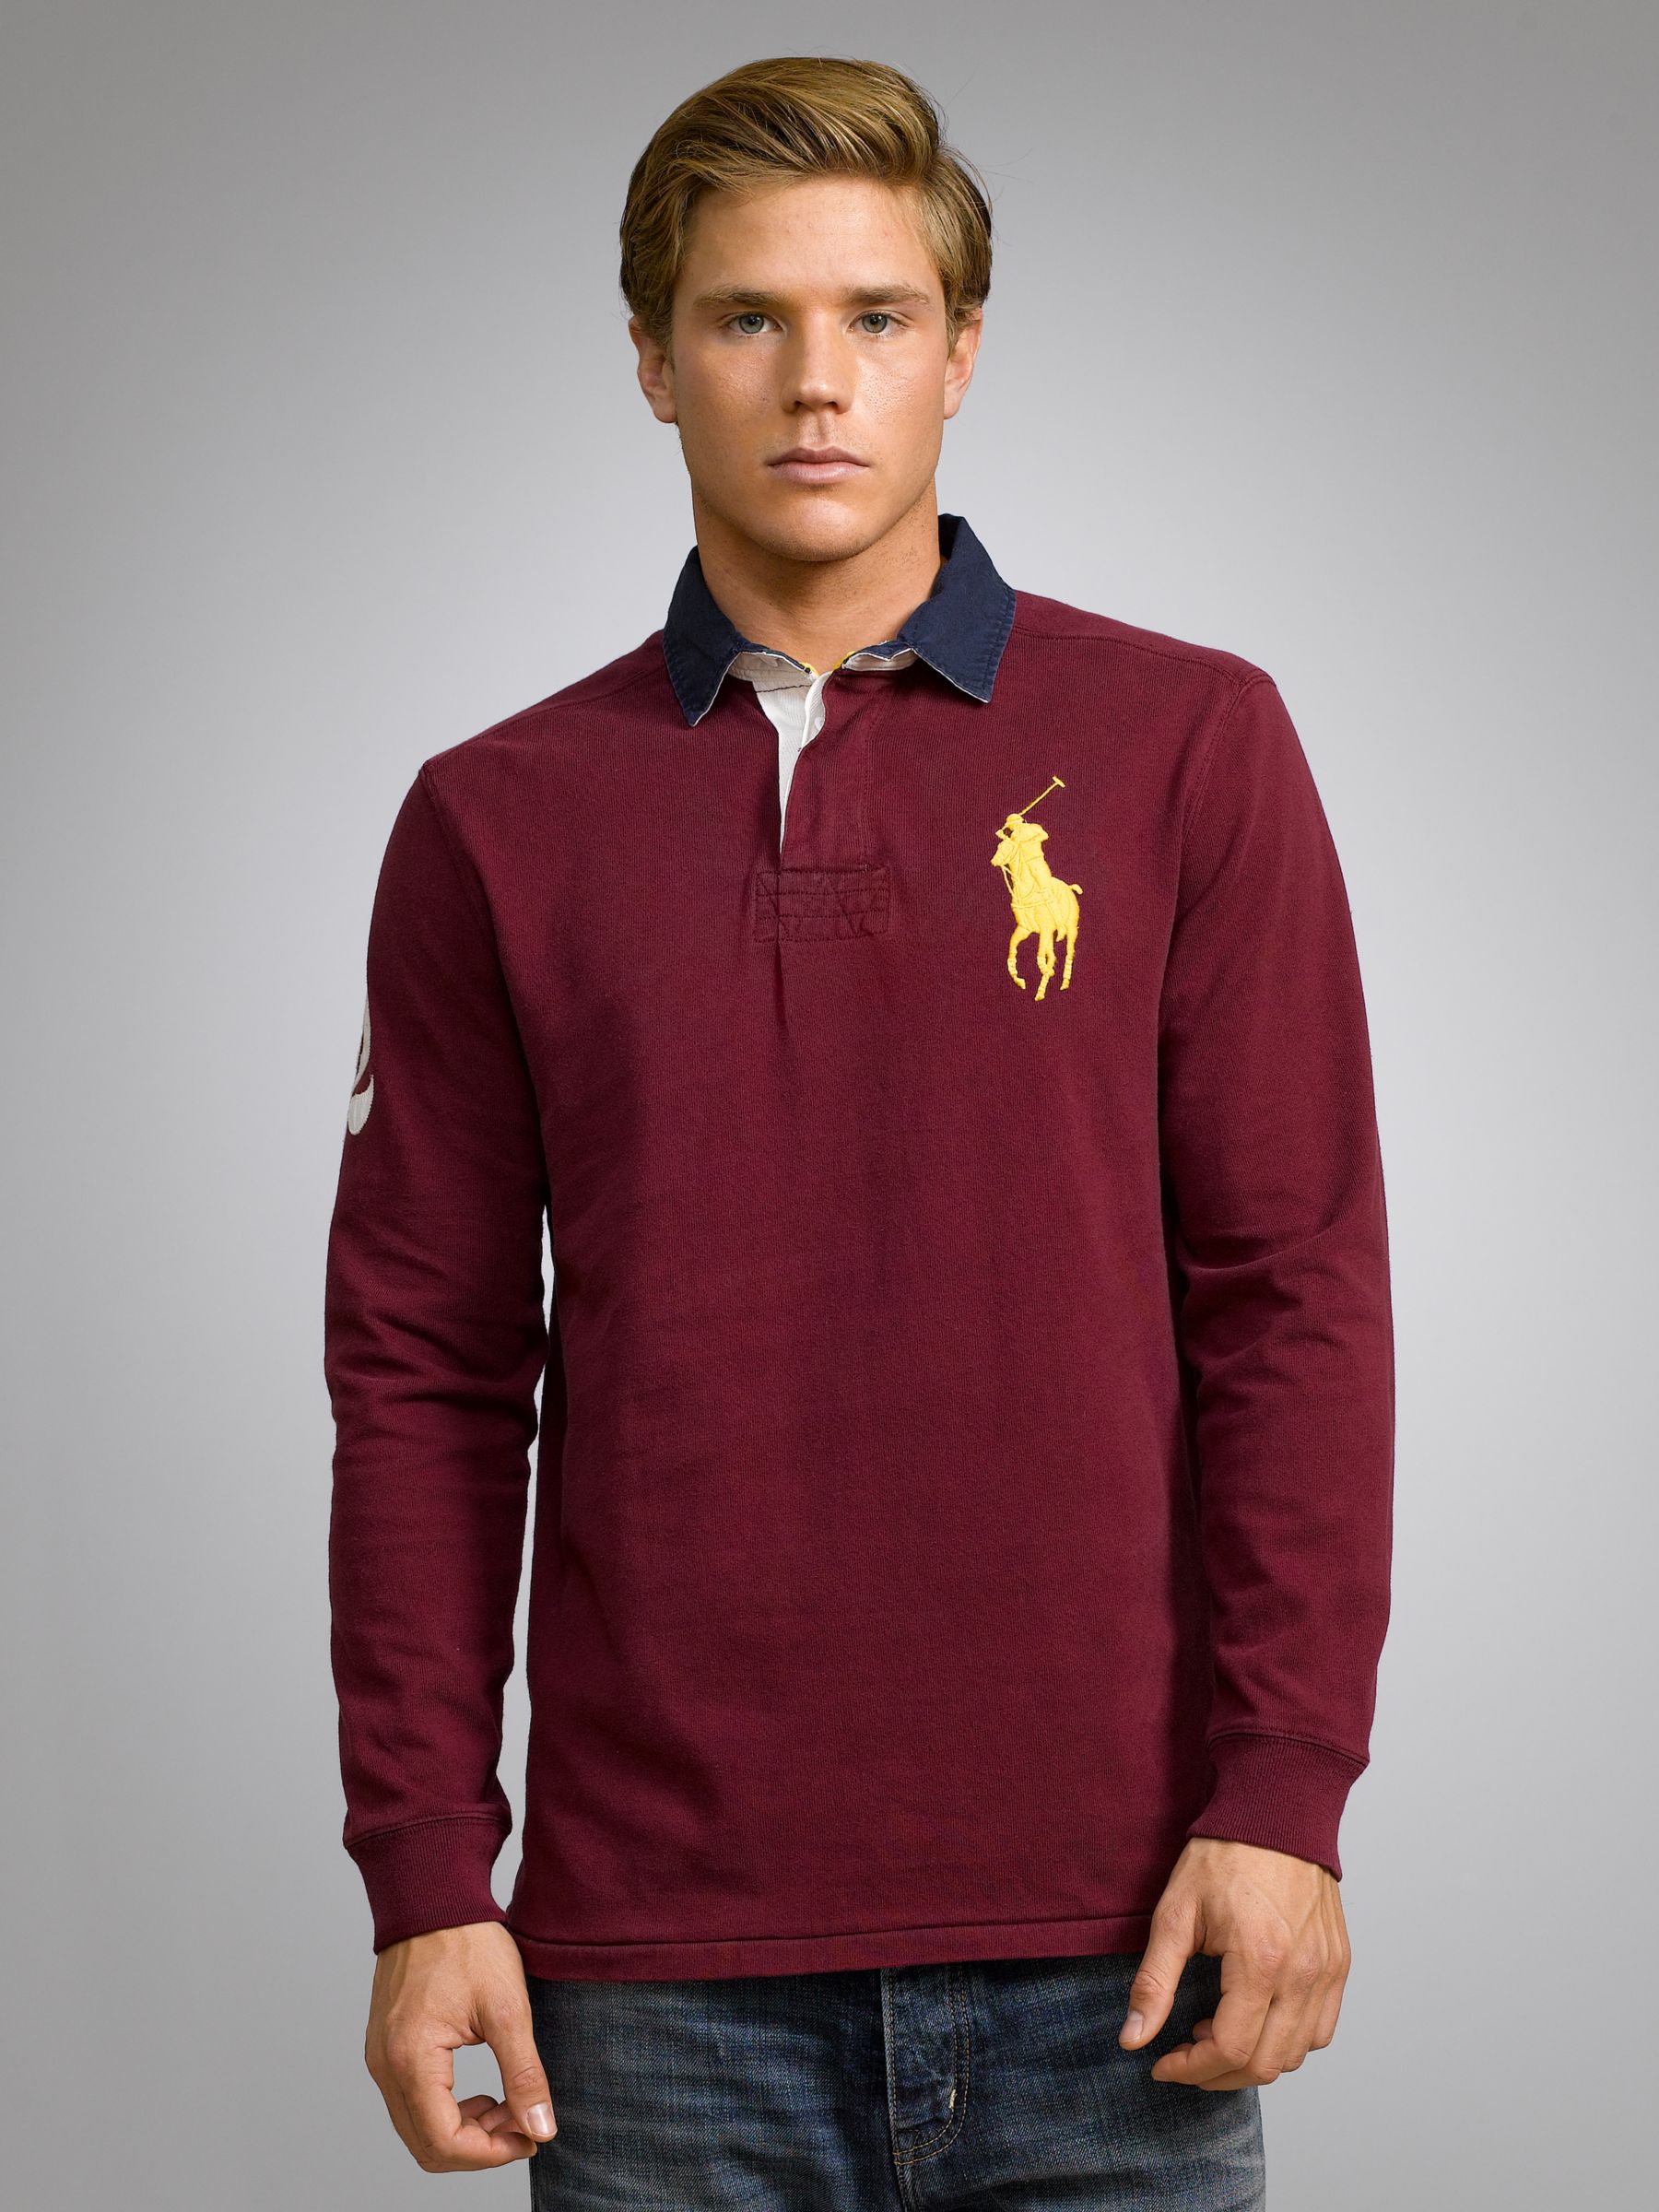 Polo Ralph Lauren Custom Fit Rugby Shirt, Wine